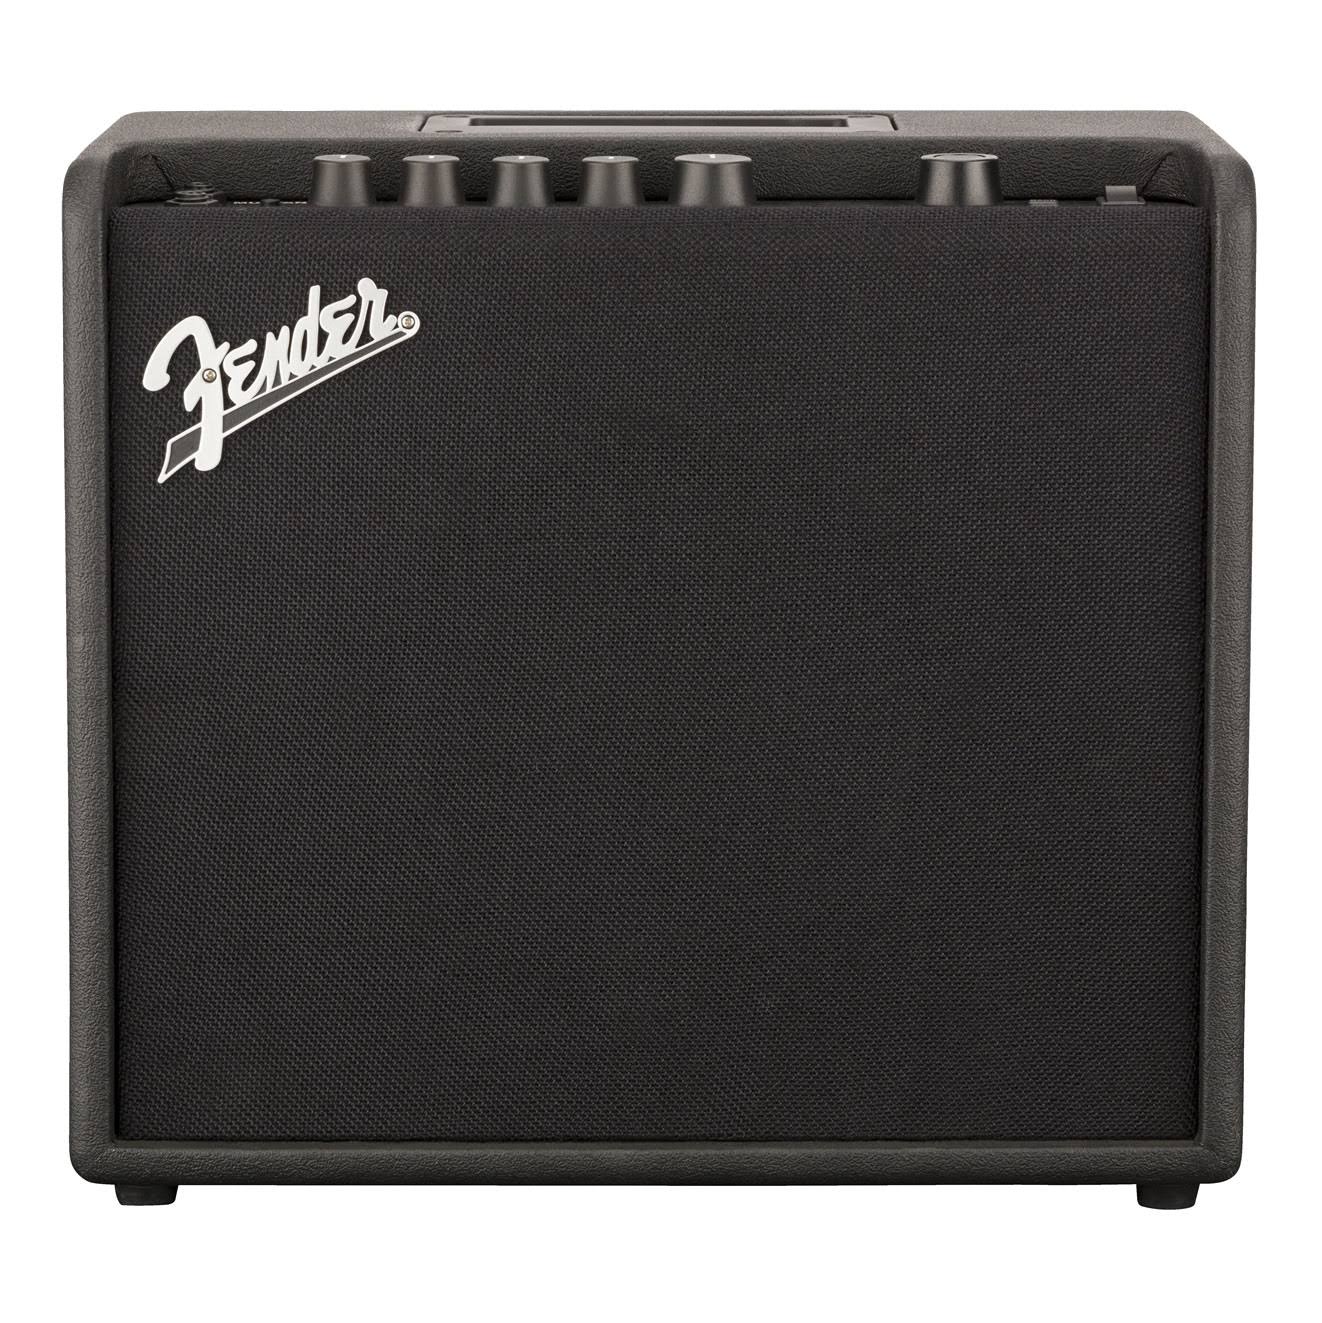 Fender Mustang Digital Guitar Amplifier - Black, 25W